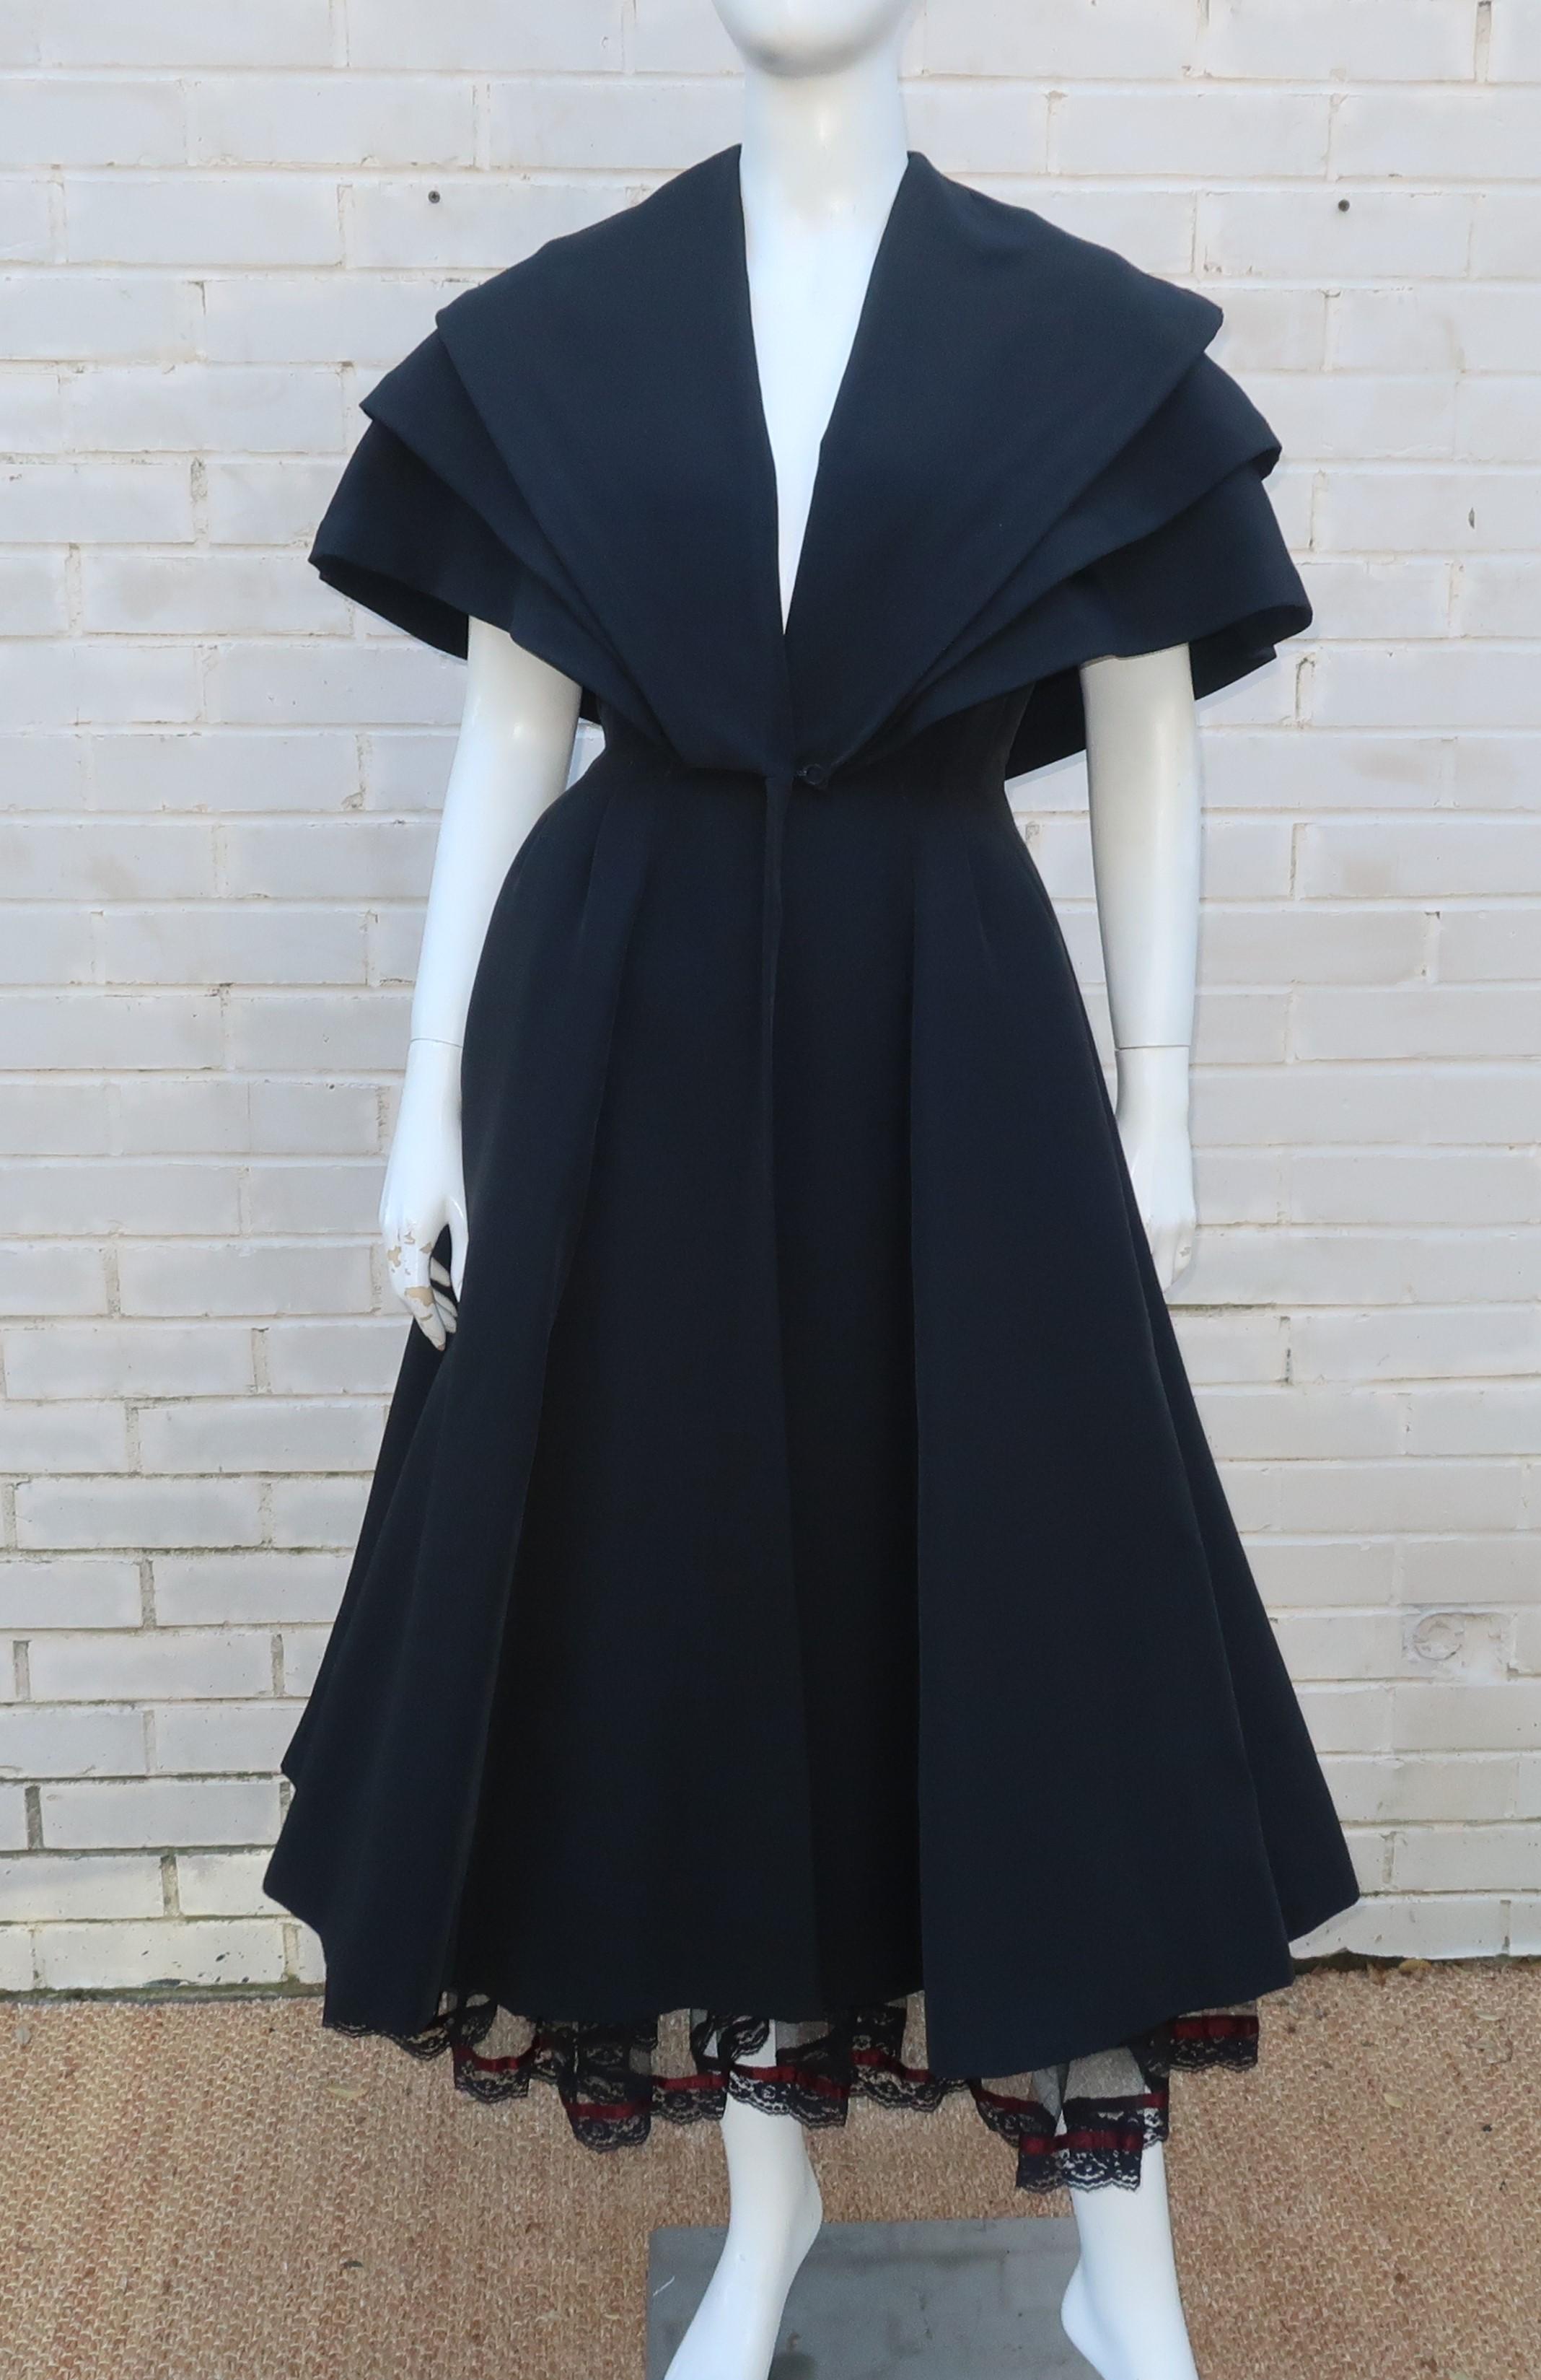 Bonwit Teller 'New Look' Black Silk Faille Evening Coat Dress, C.1950 8